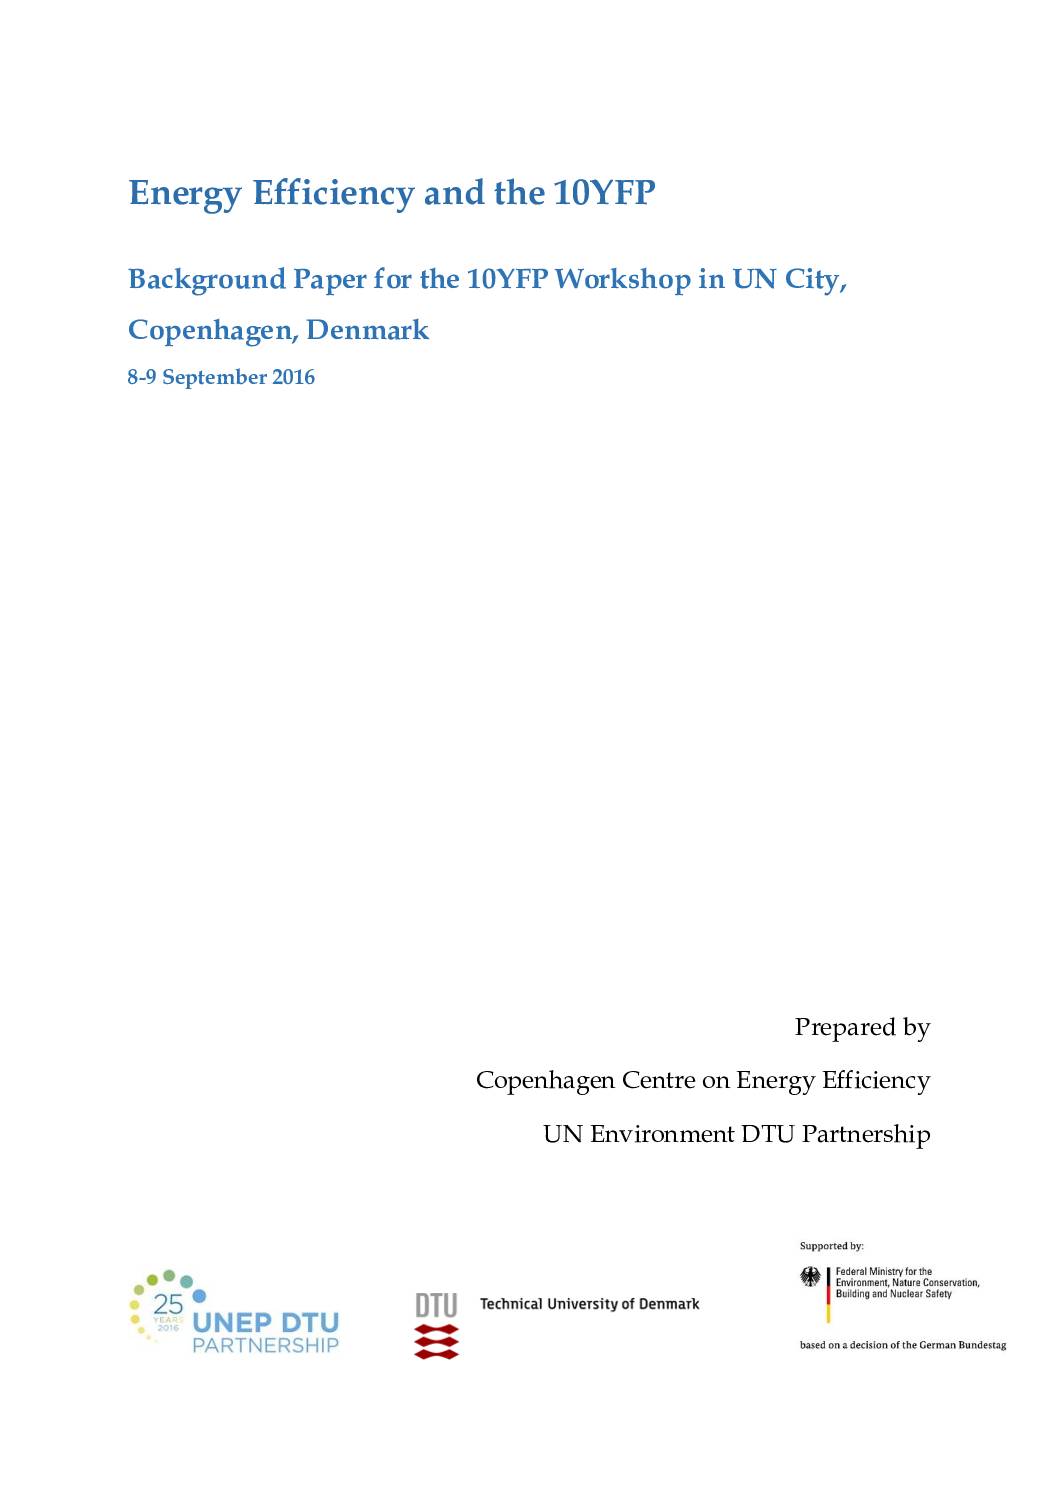 Energy Efficiency and the 10YFP. Background Paper for the 10YFP Workshop in UN City, Copenhagen, Denmark